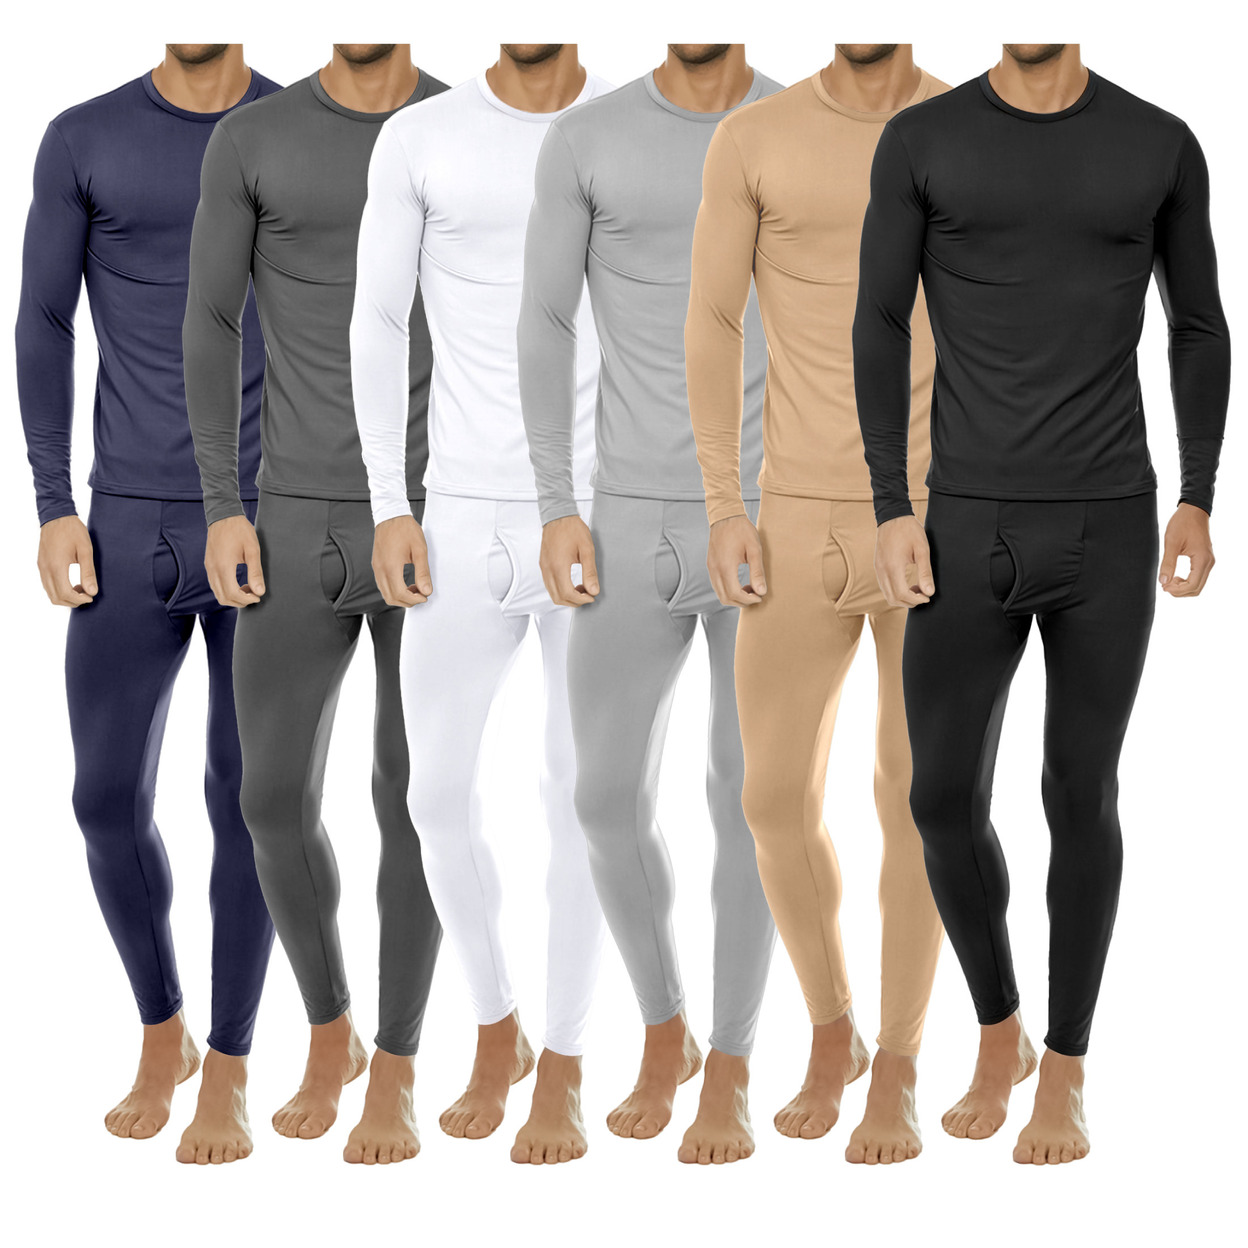 2-Pieces: Men's Winter Warm Fleece Lined Thermal Underwear Set For Cold Weather - Navy, Medium